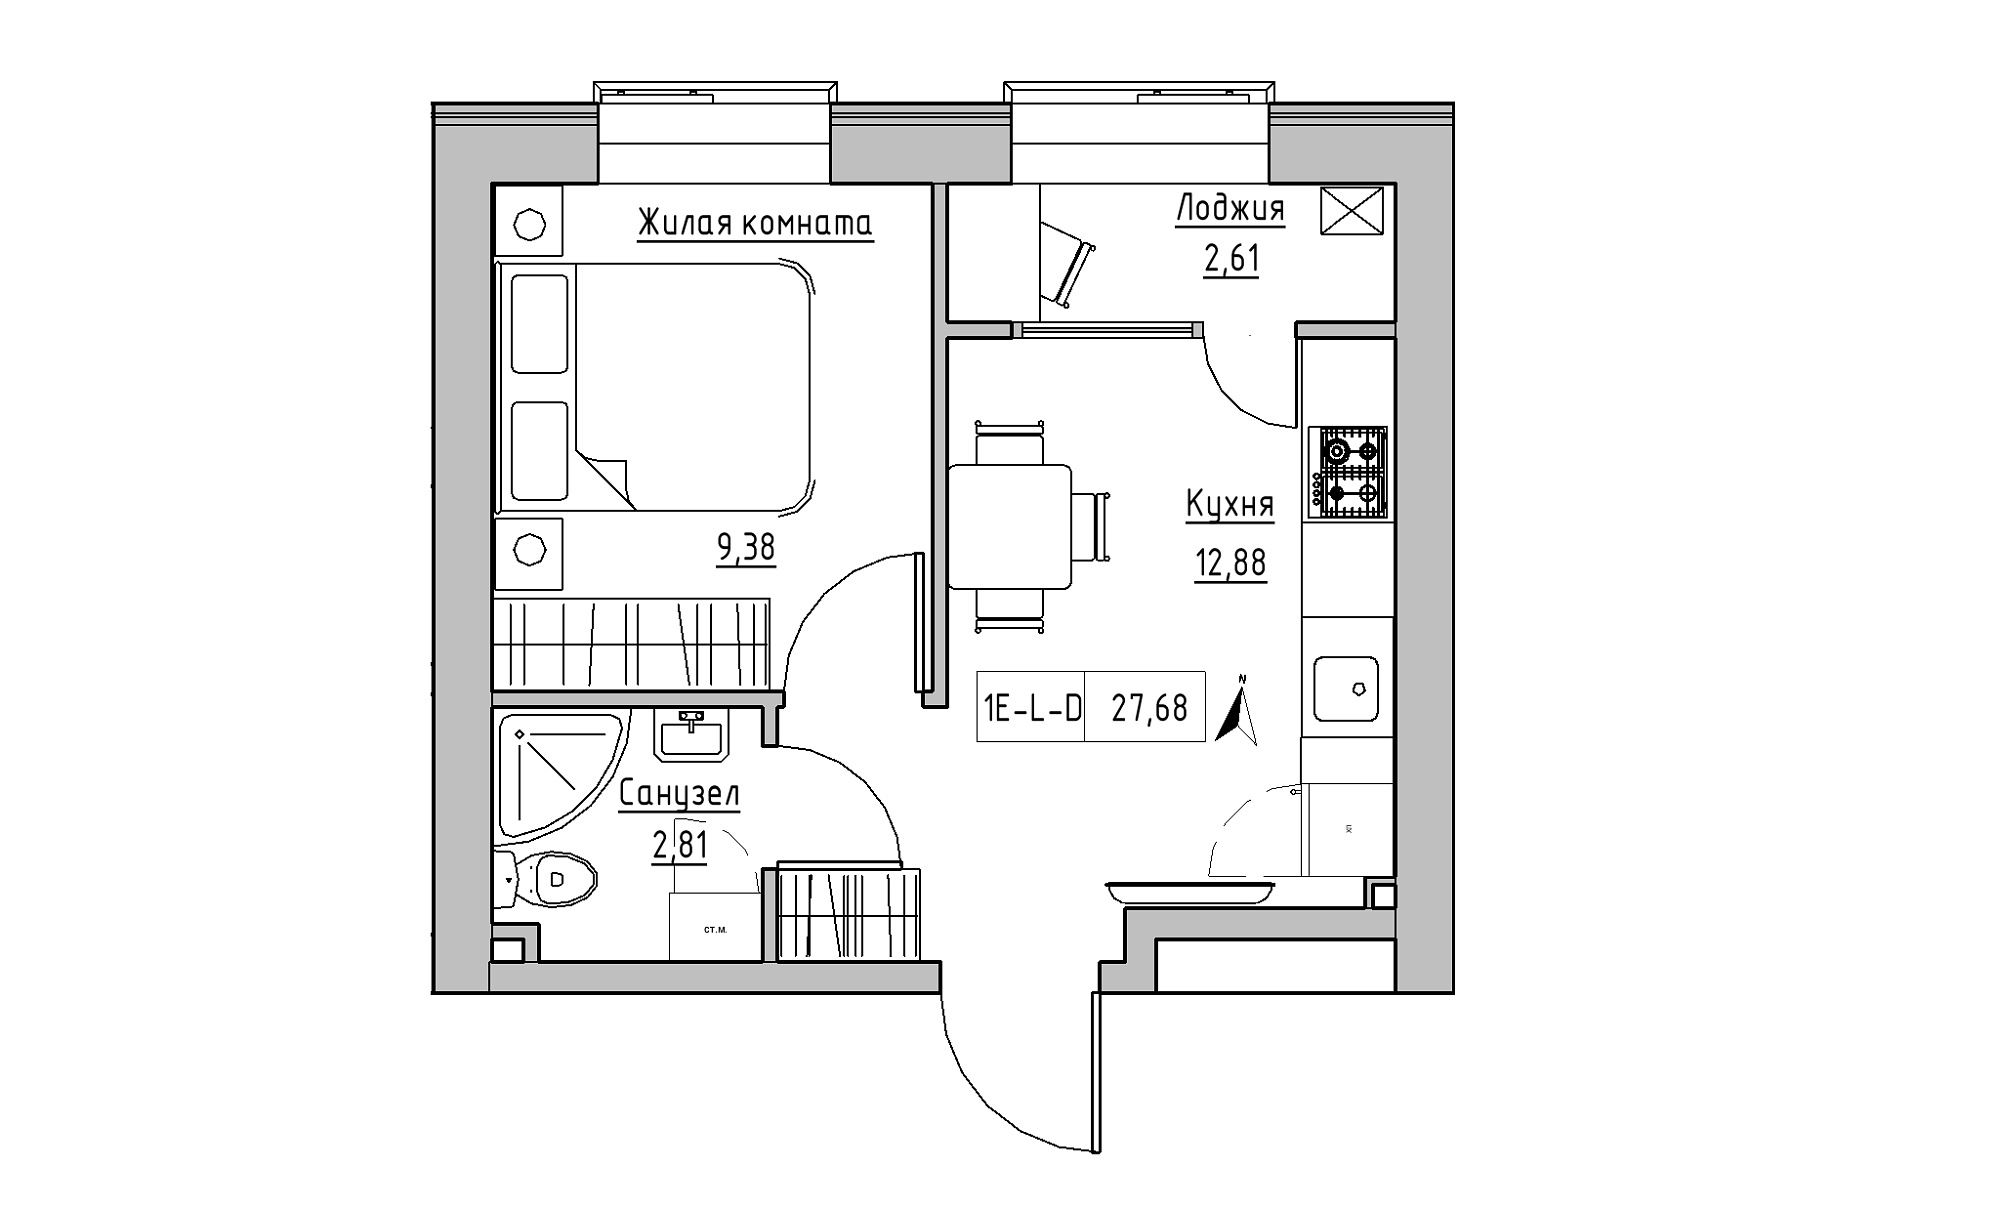 Planning 1-rm flats area 27.68m2, KS-016-05/0001.